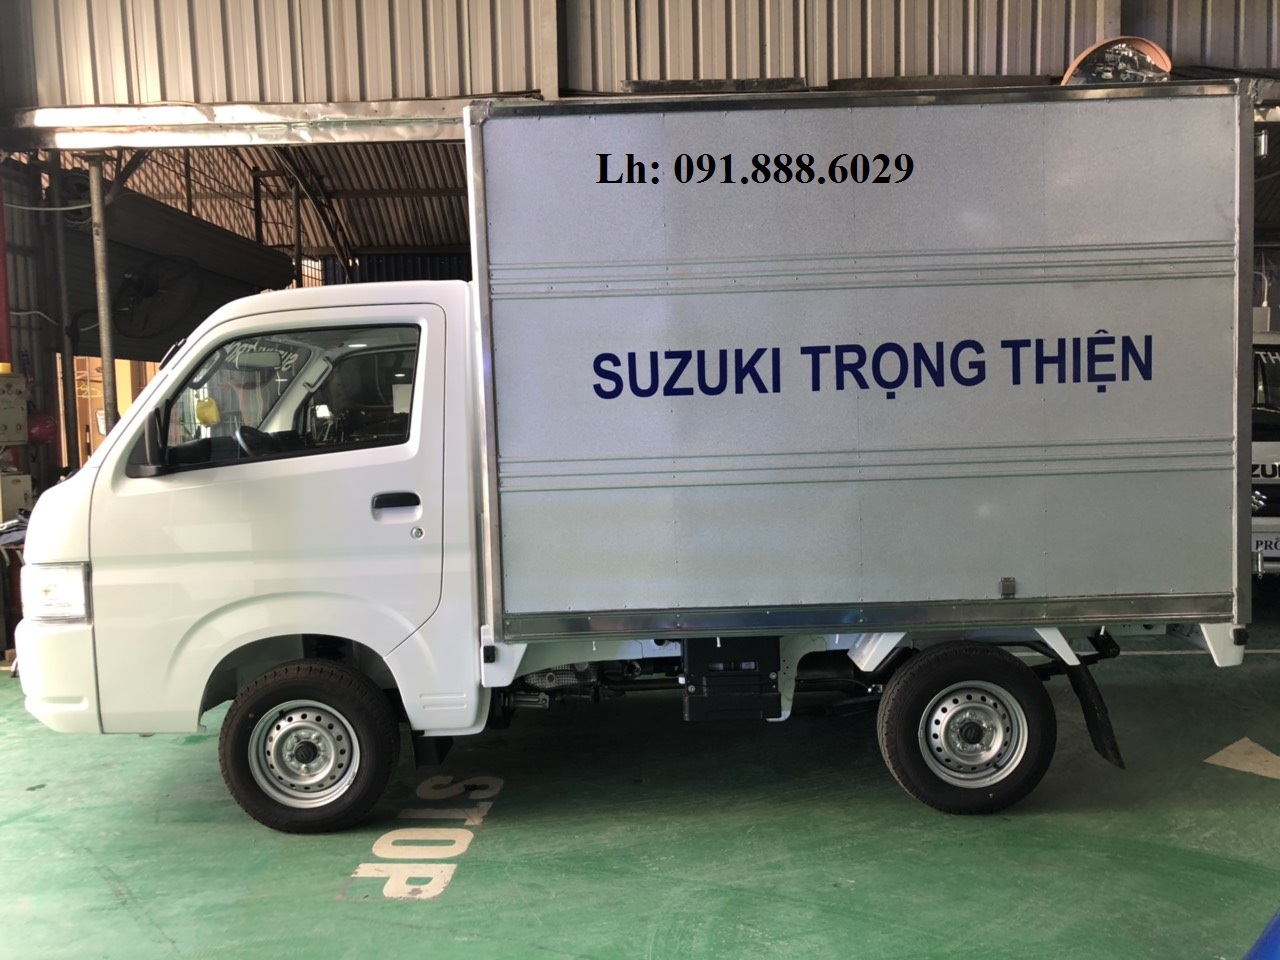 Suzuki Super Carry Pro euro 4 2020 - Bán xe tải suzuki pro giá tốt tại quảng ninh 